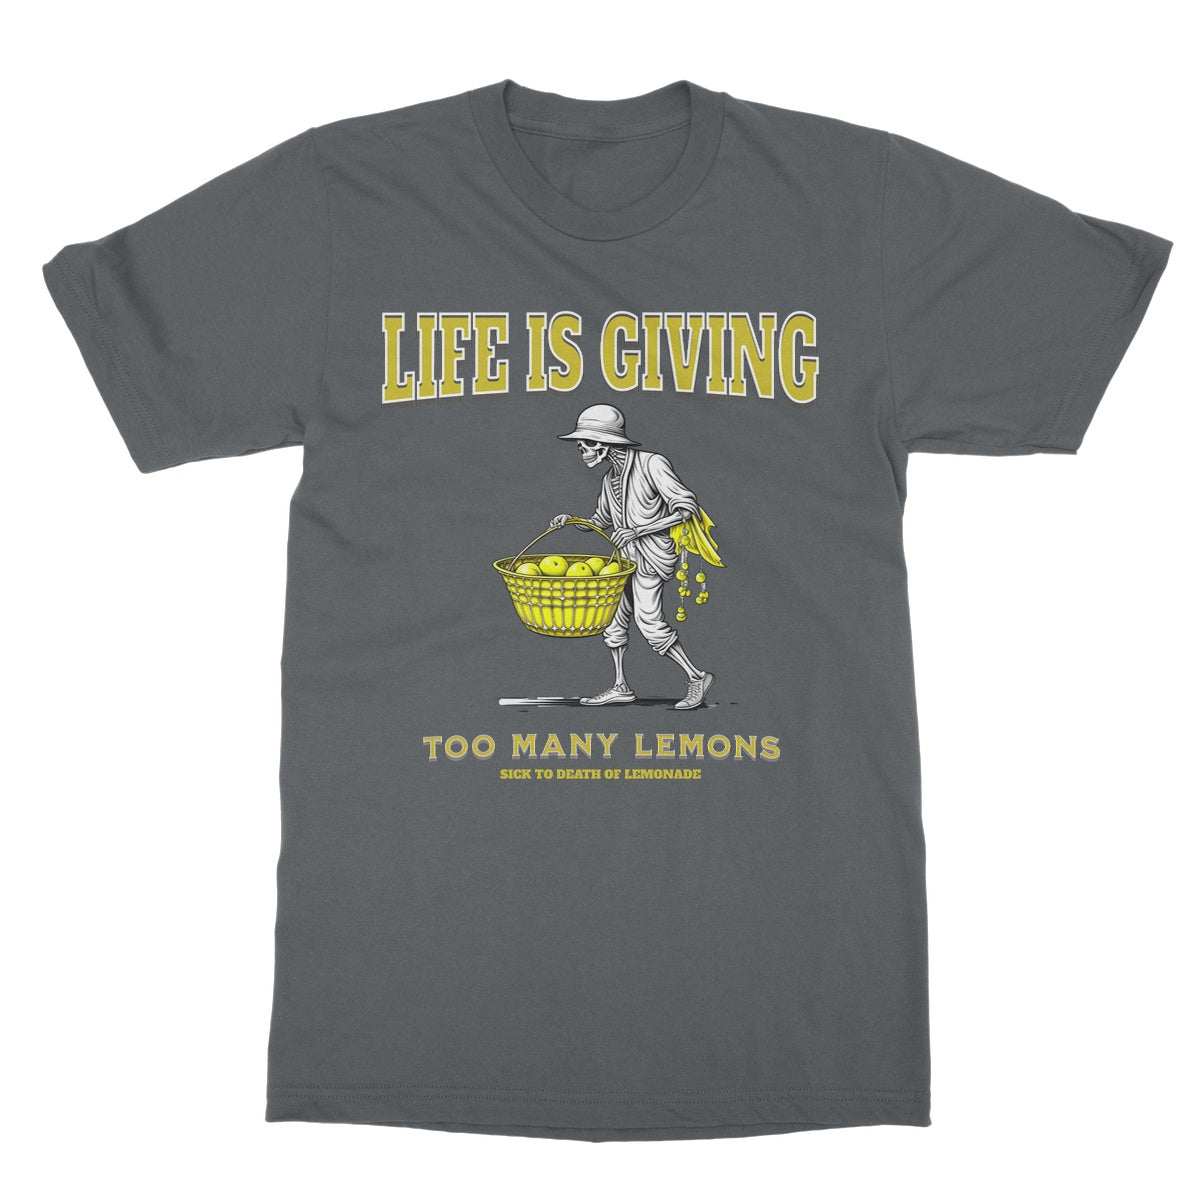 Life is giving too many lemons t shirt dark grey